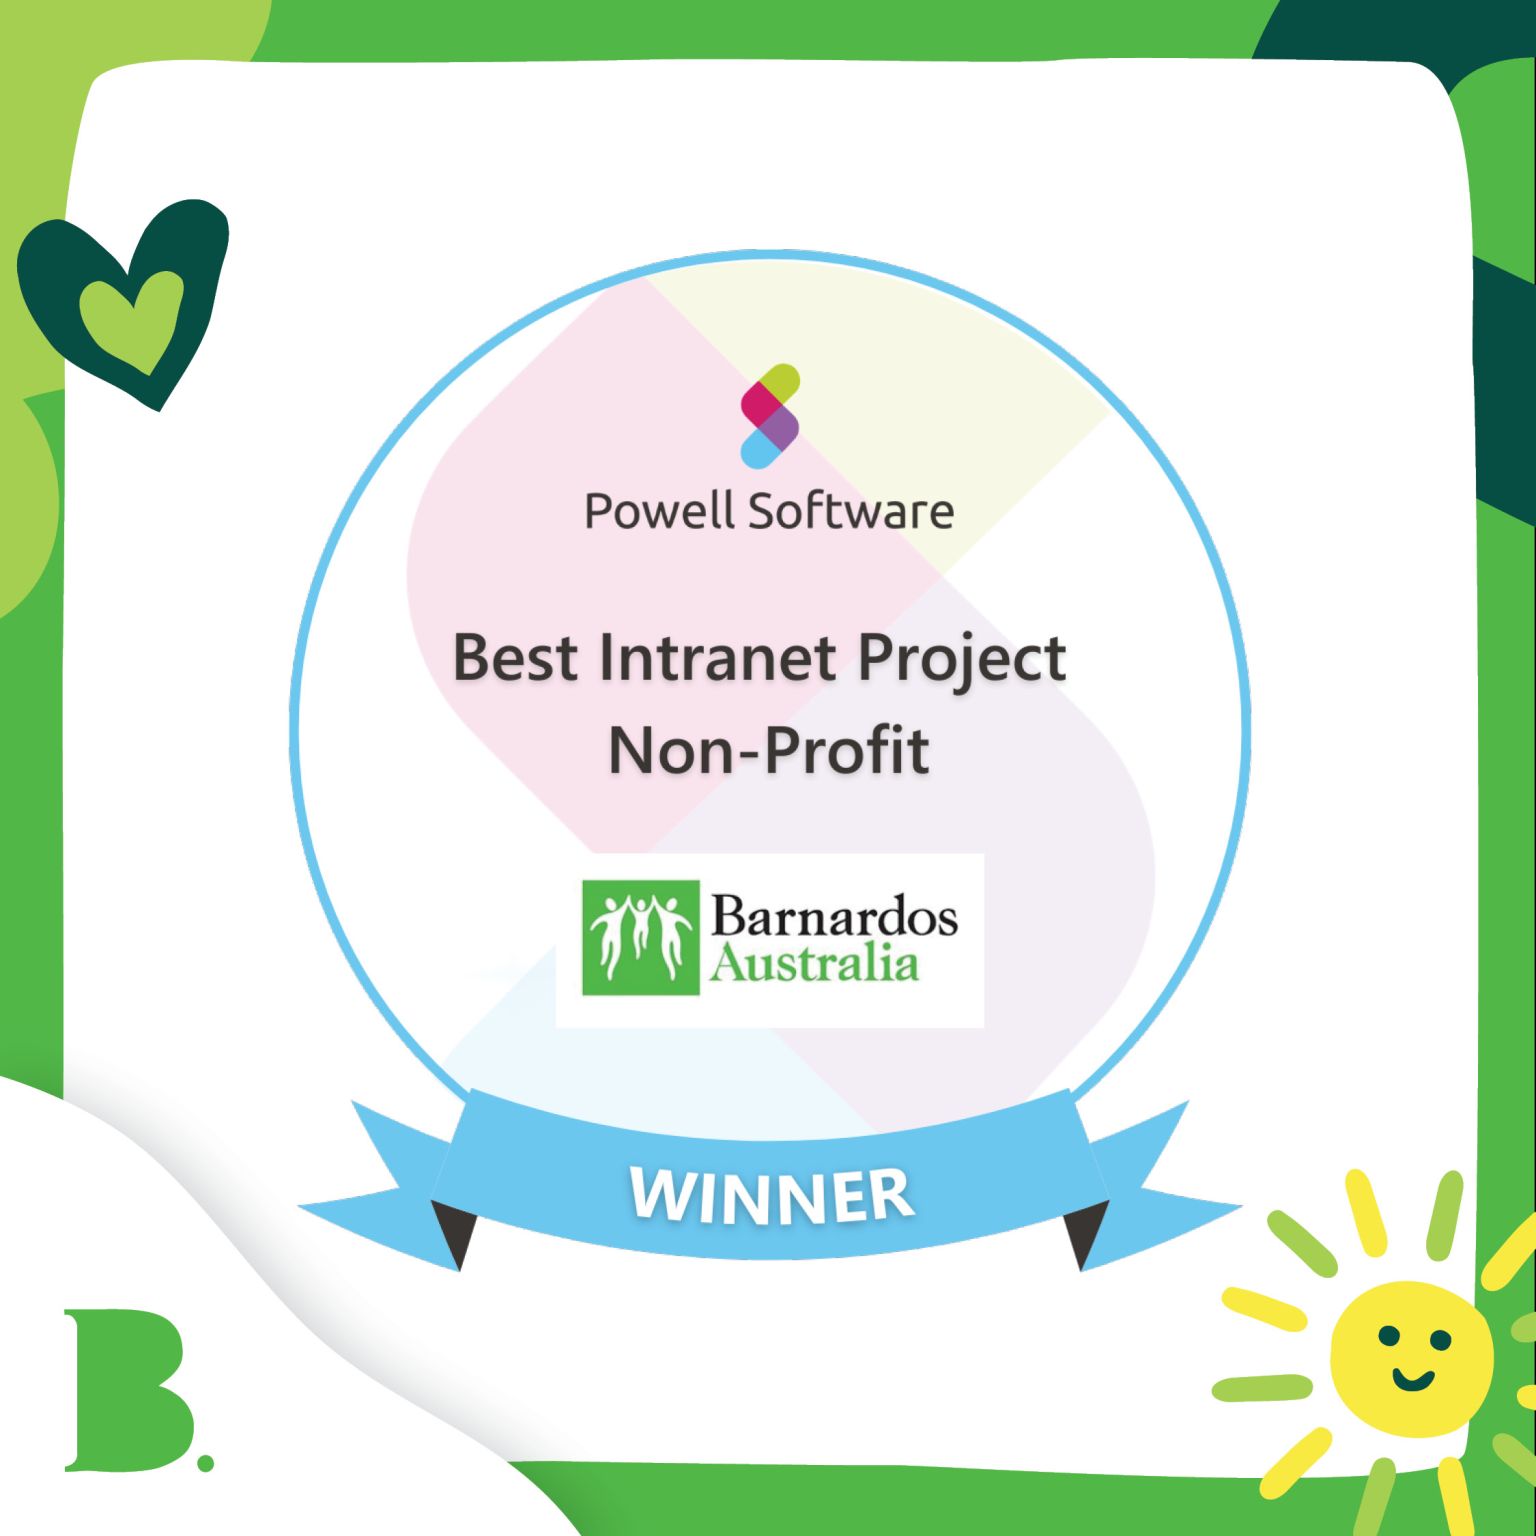 Celebrating Excellence: Barnardos Australia Wins "Best Intranet Project for Non-Profit"-Image